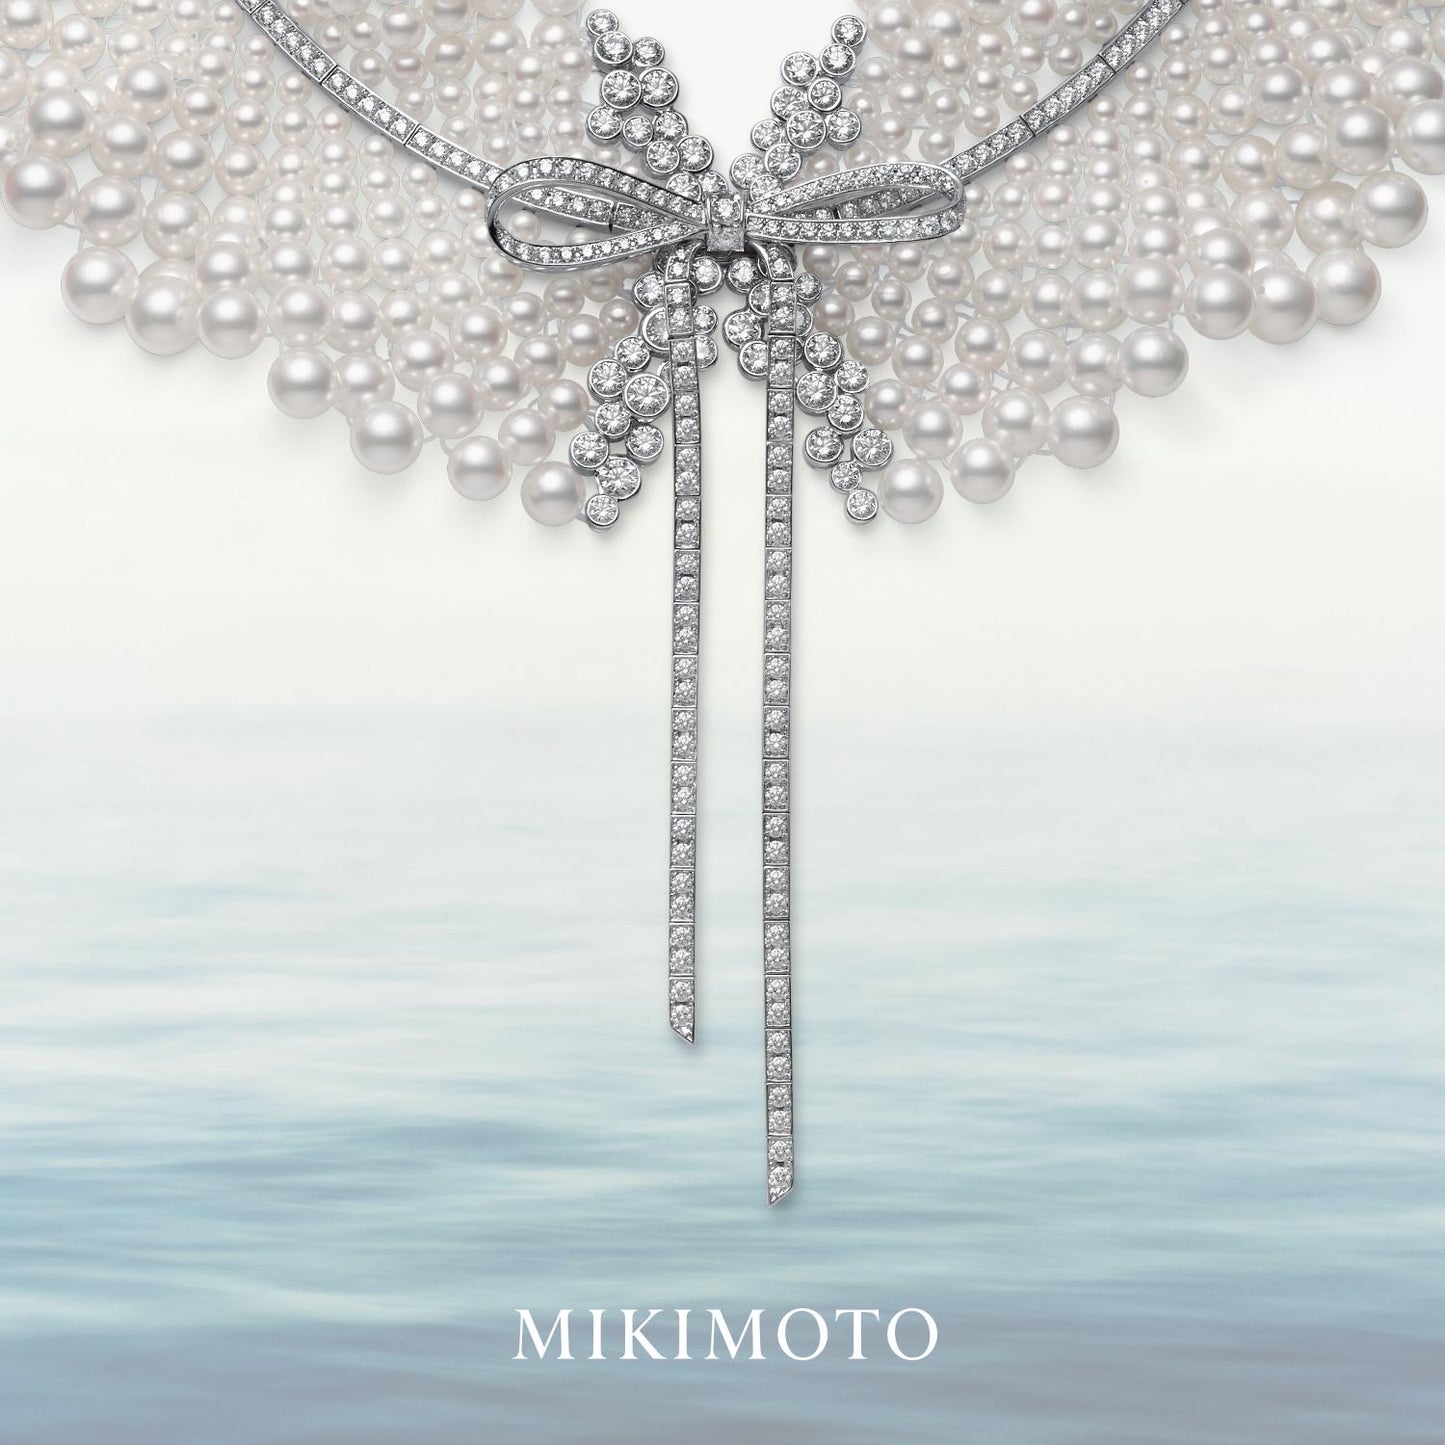 Mikimoto - Akoya Pearls